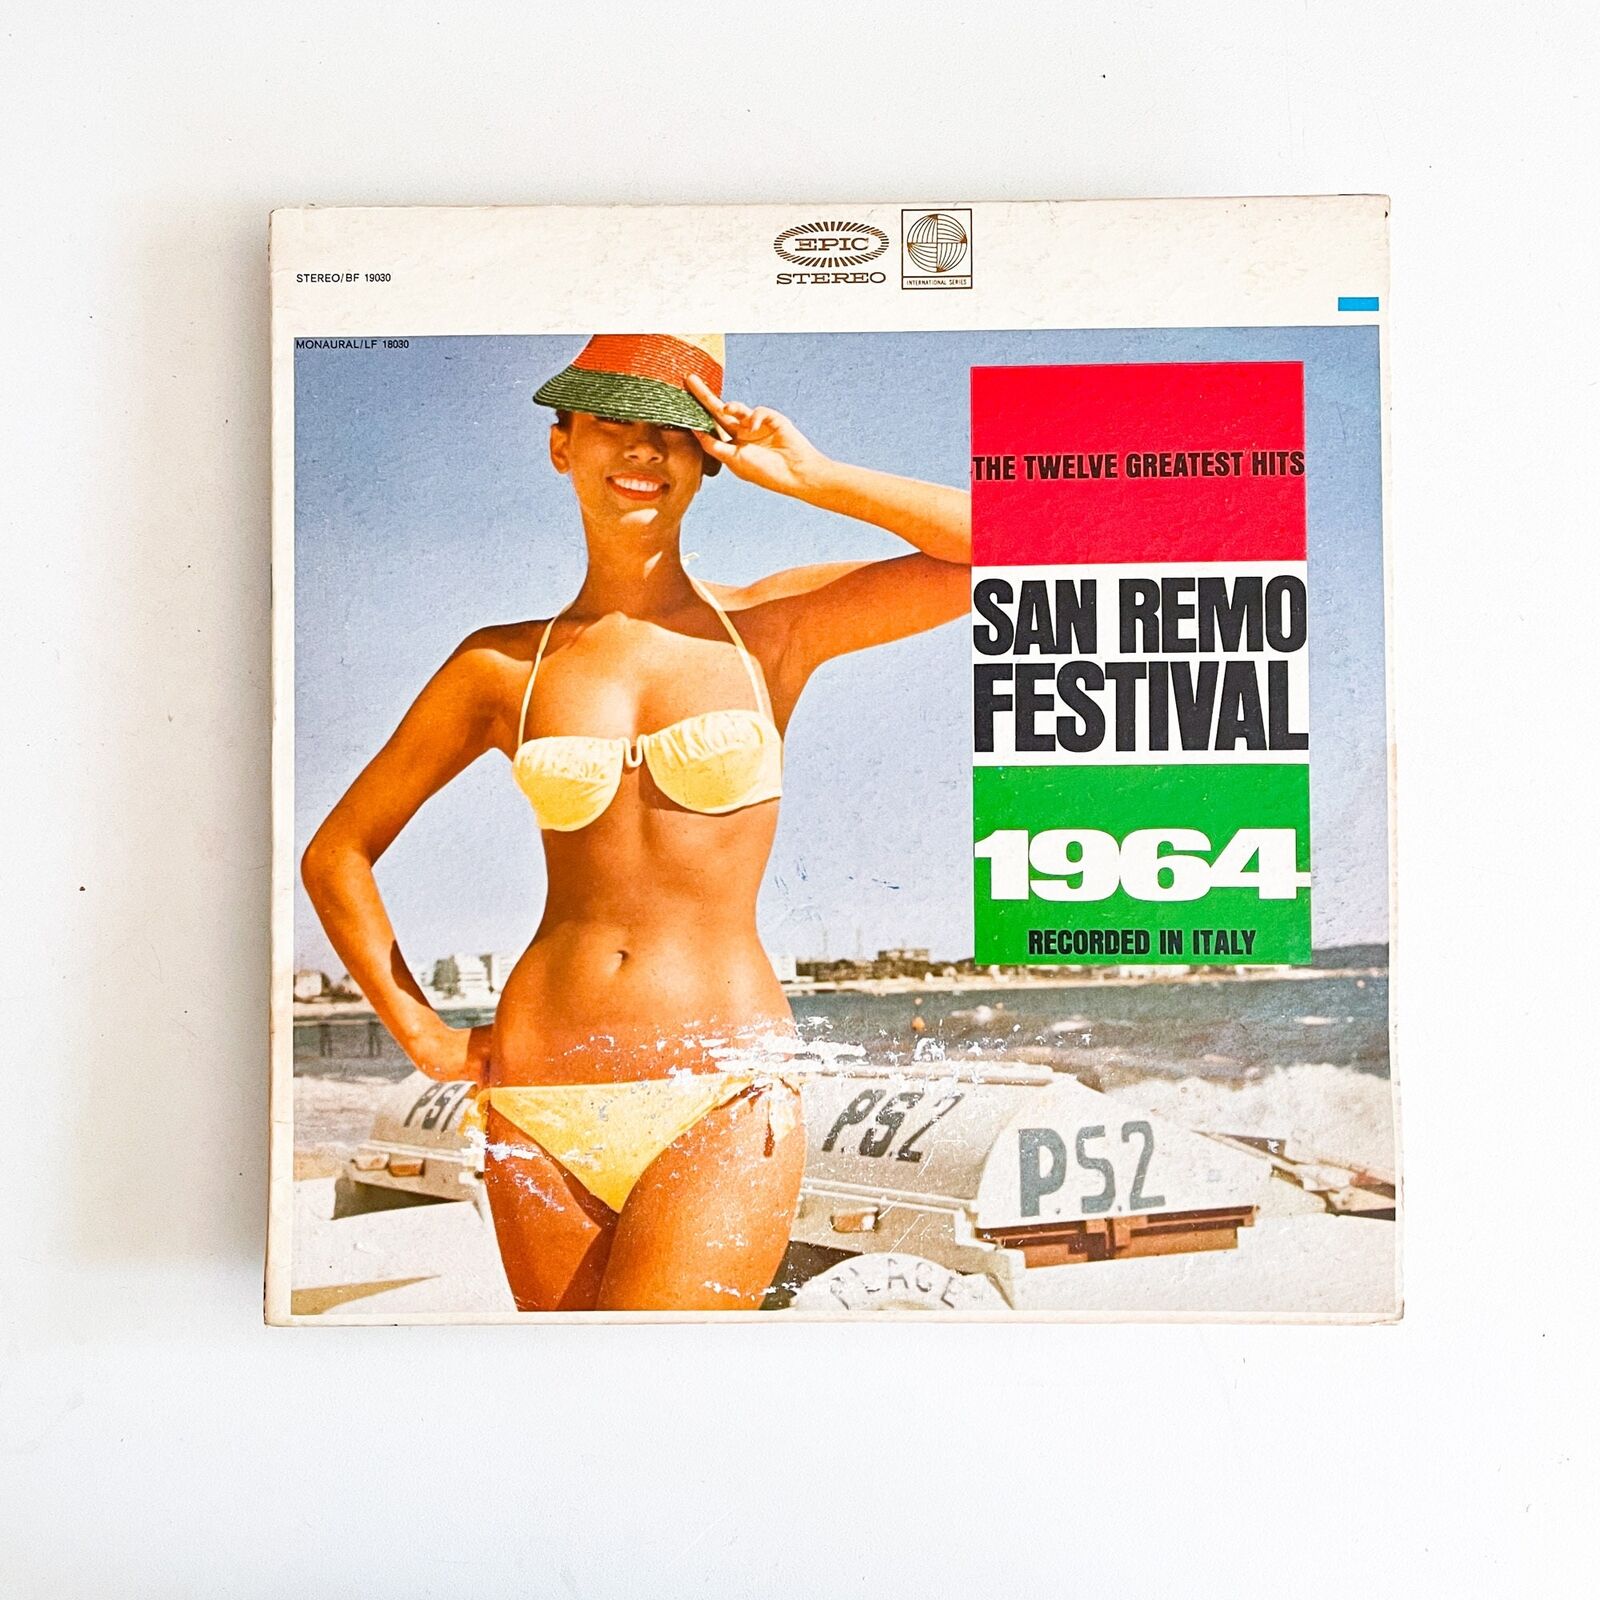 San Remo Festival 1964: The Twelve Greatest Hits - Vinyl LP Record - 1964